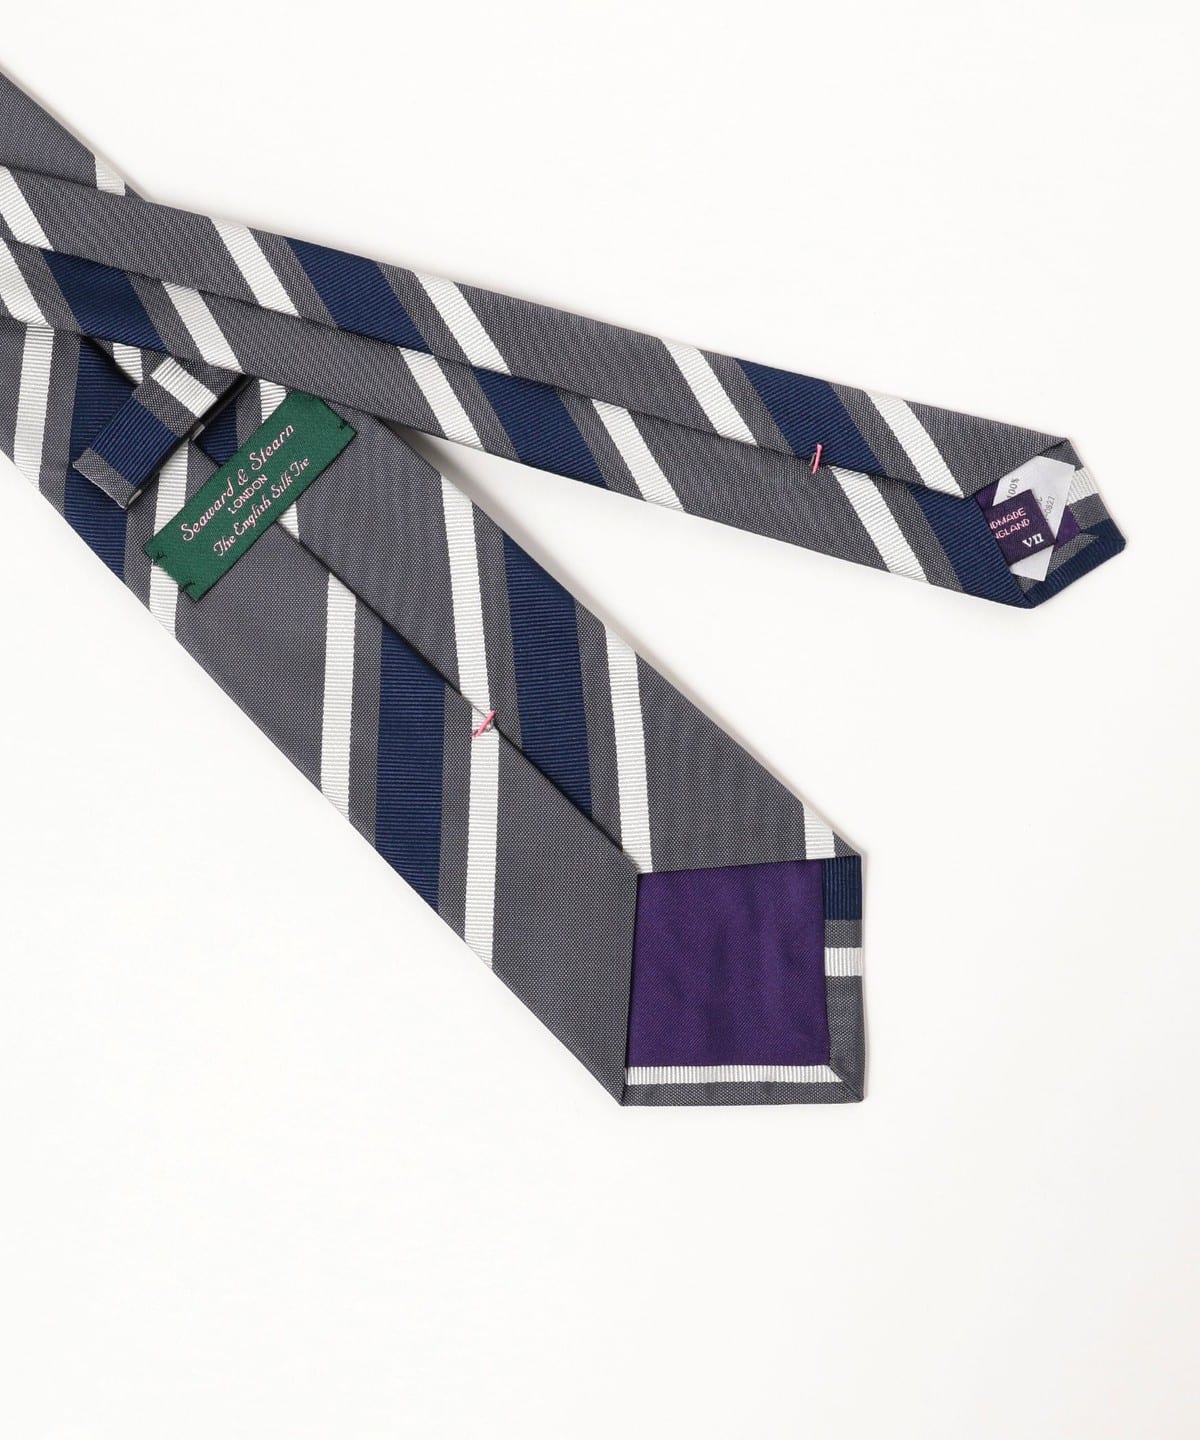 BEAMS F Seaward & Stearn BEAMS Striped necktie (suit/tie) mail 